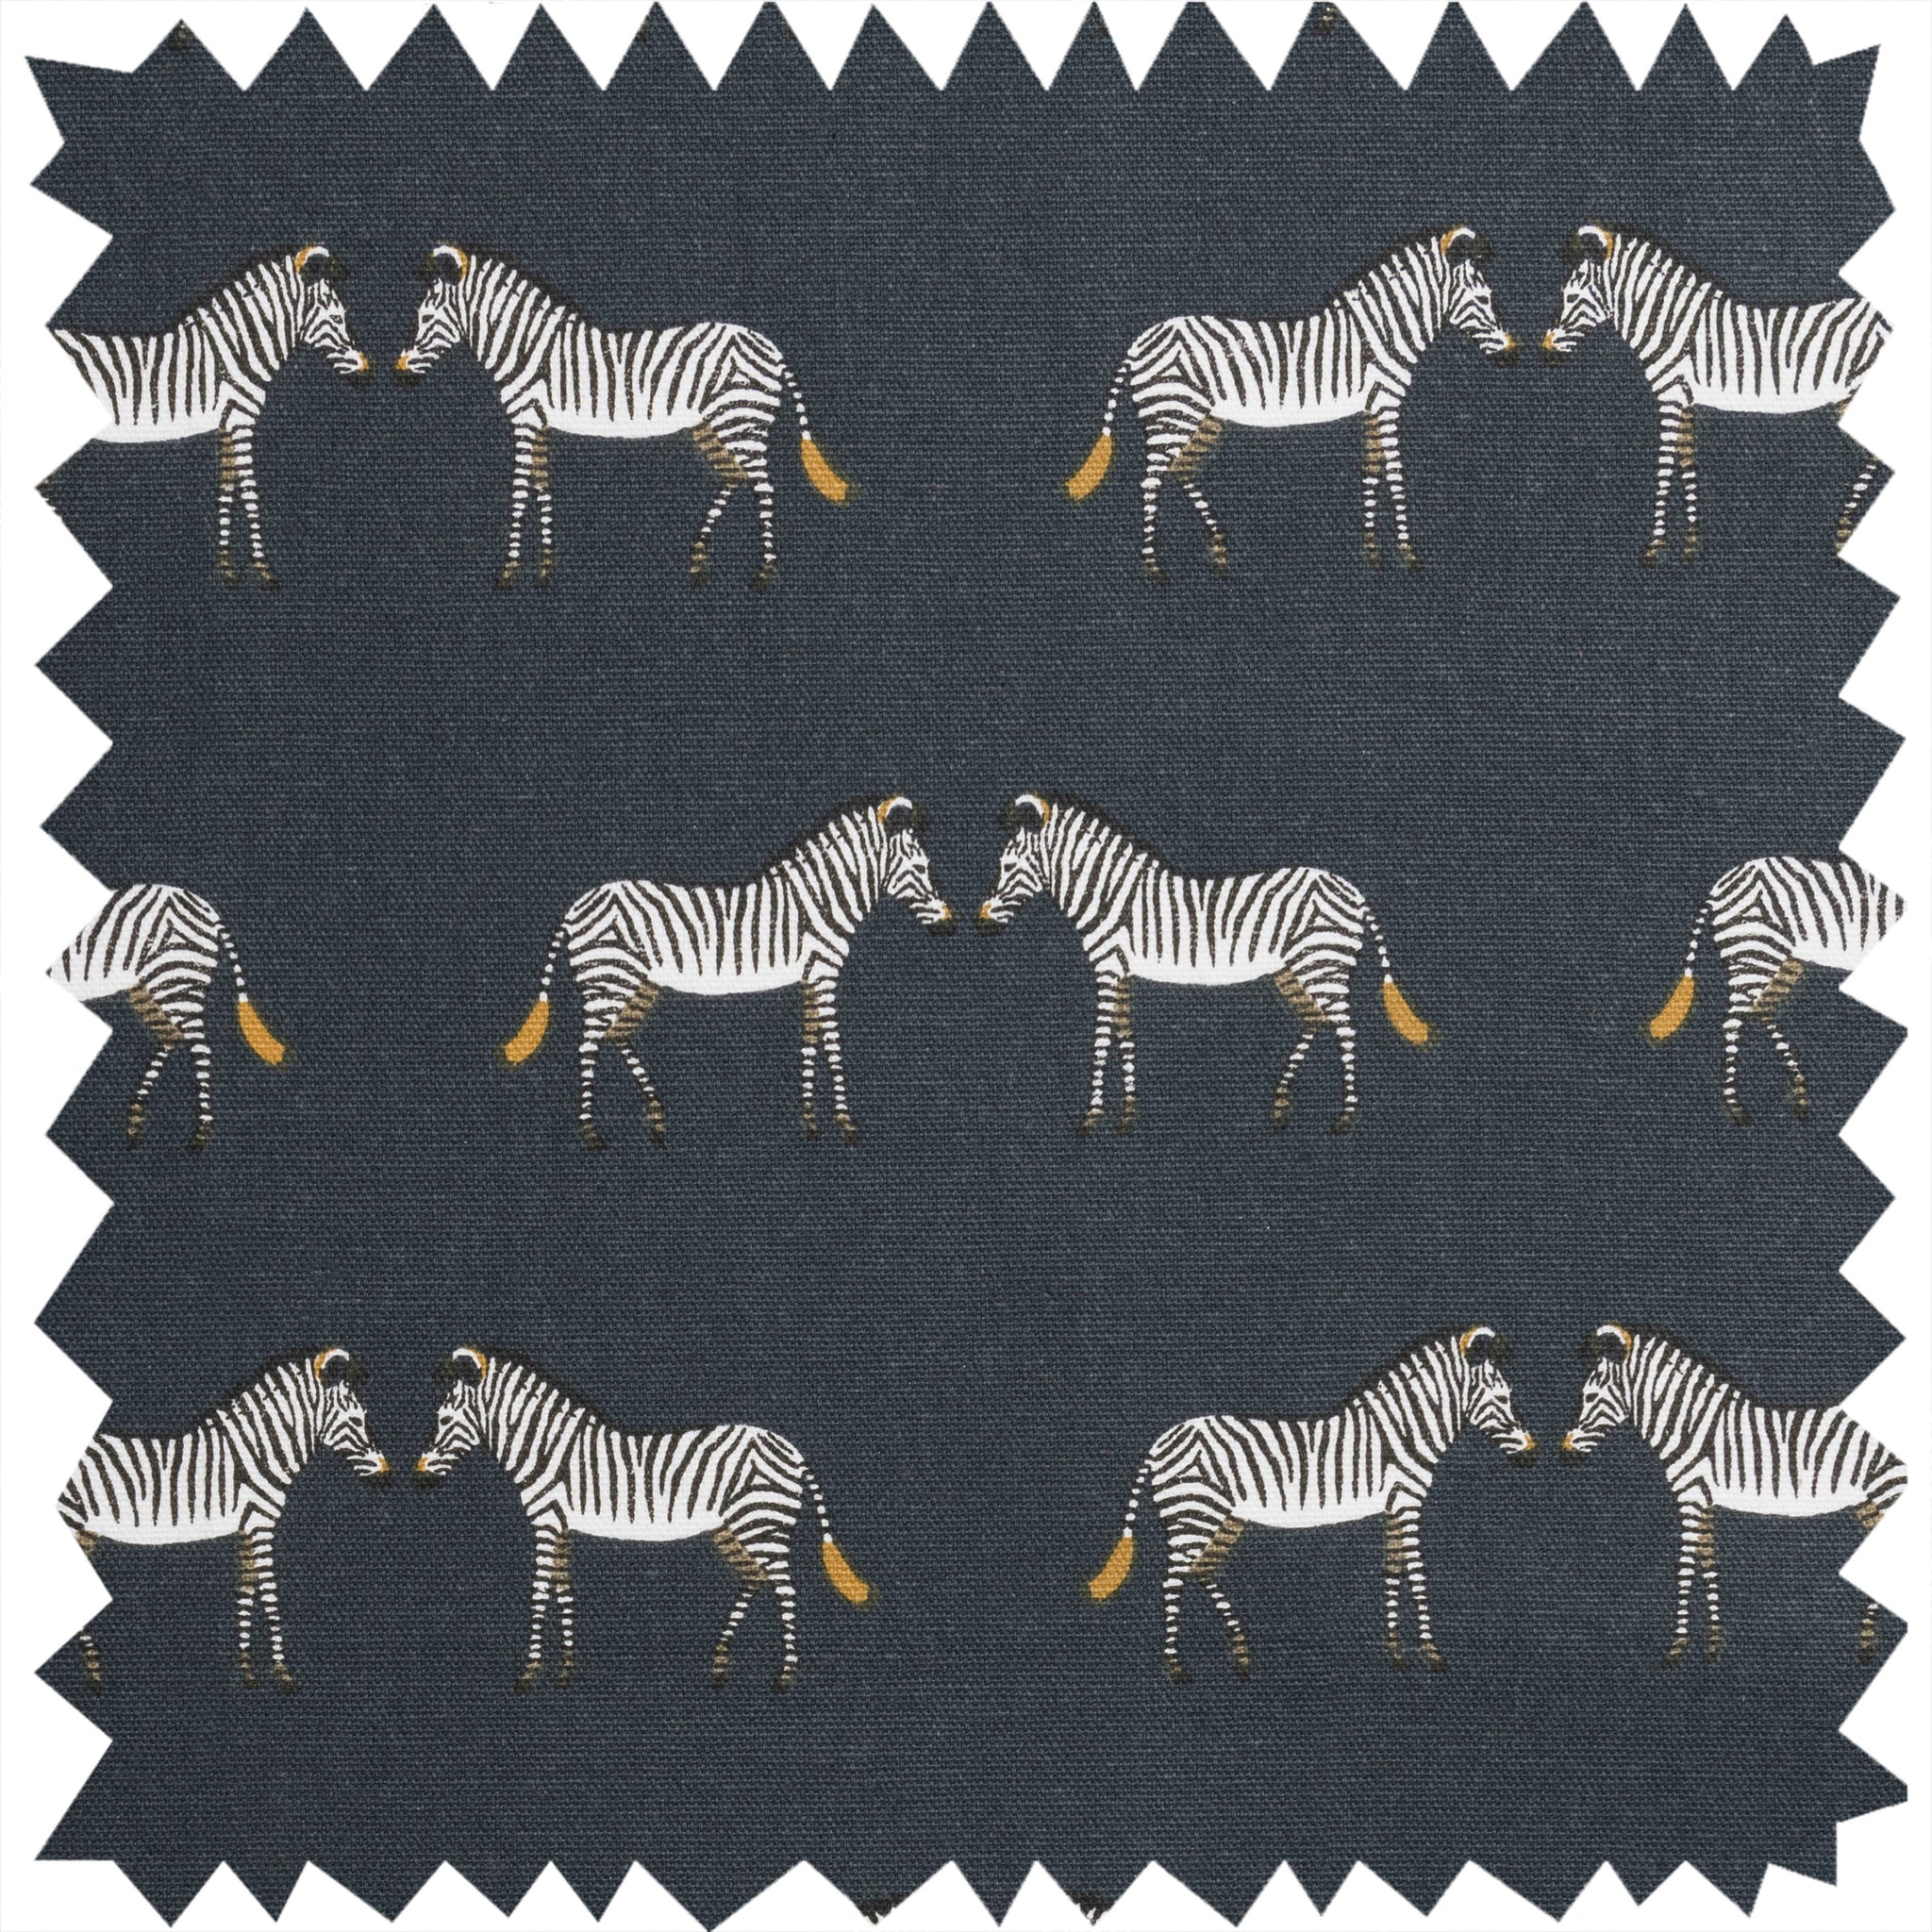 Zebra Fabric Sample